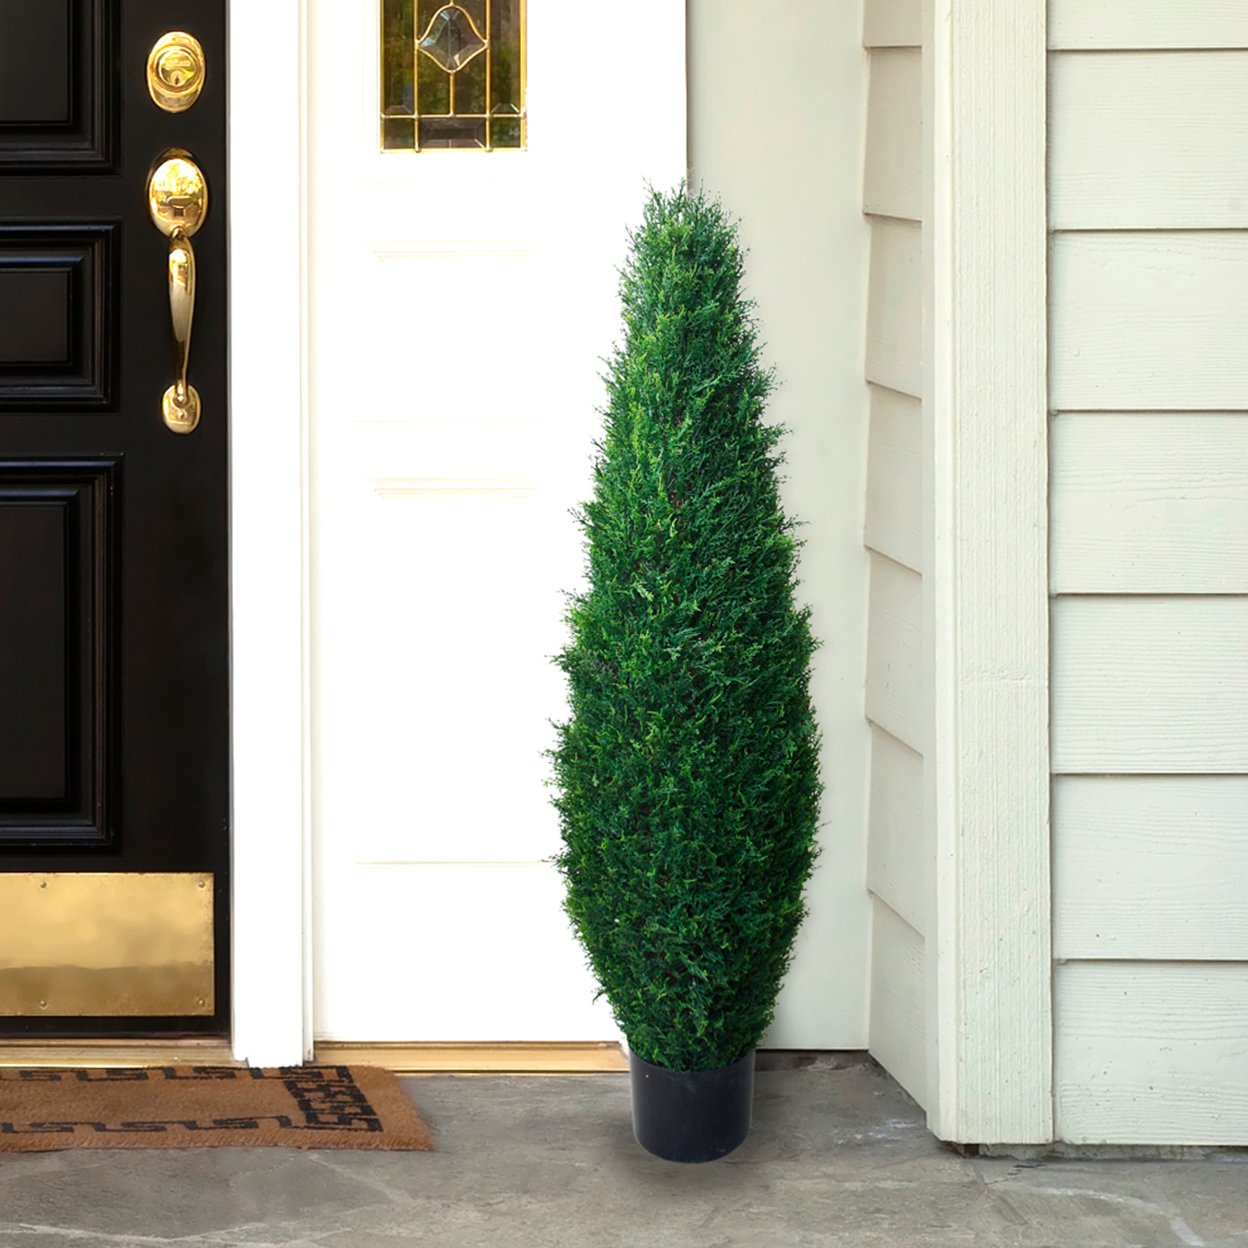 40 Inch Artificial Cyprus Tree â Large Faux Potted Evergreen Plant For Indoor Or Outdoor Decoration At Home Or Office